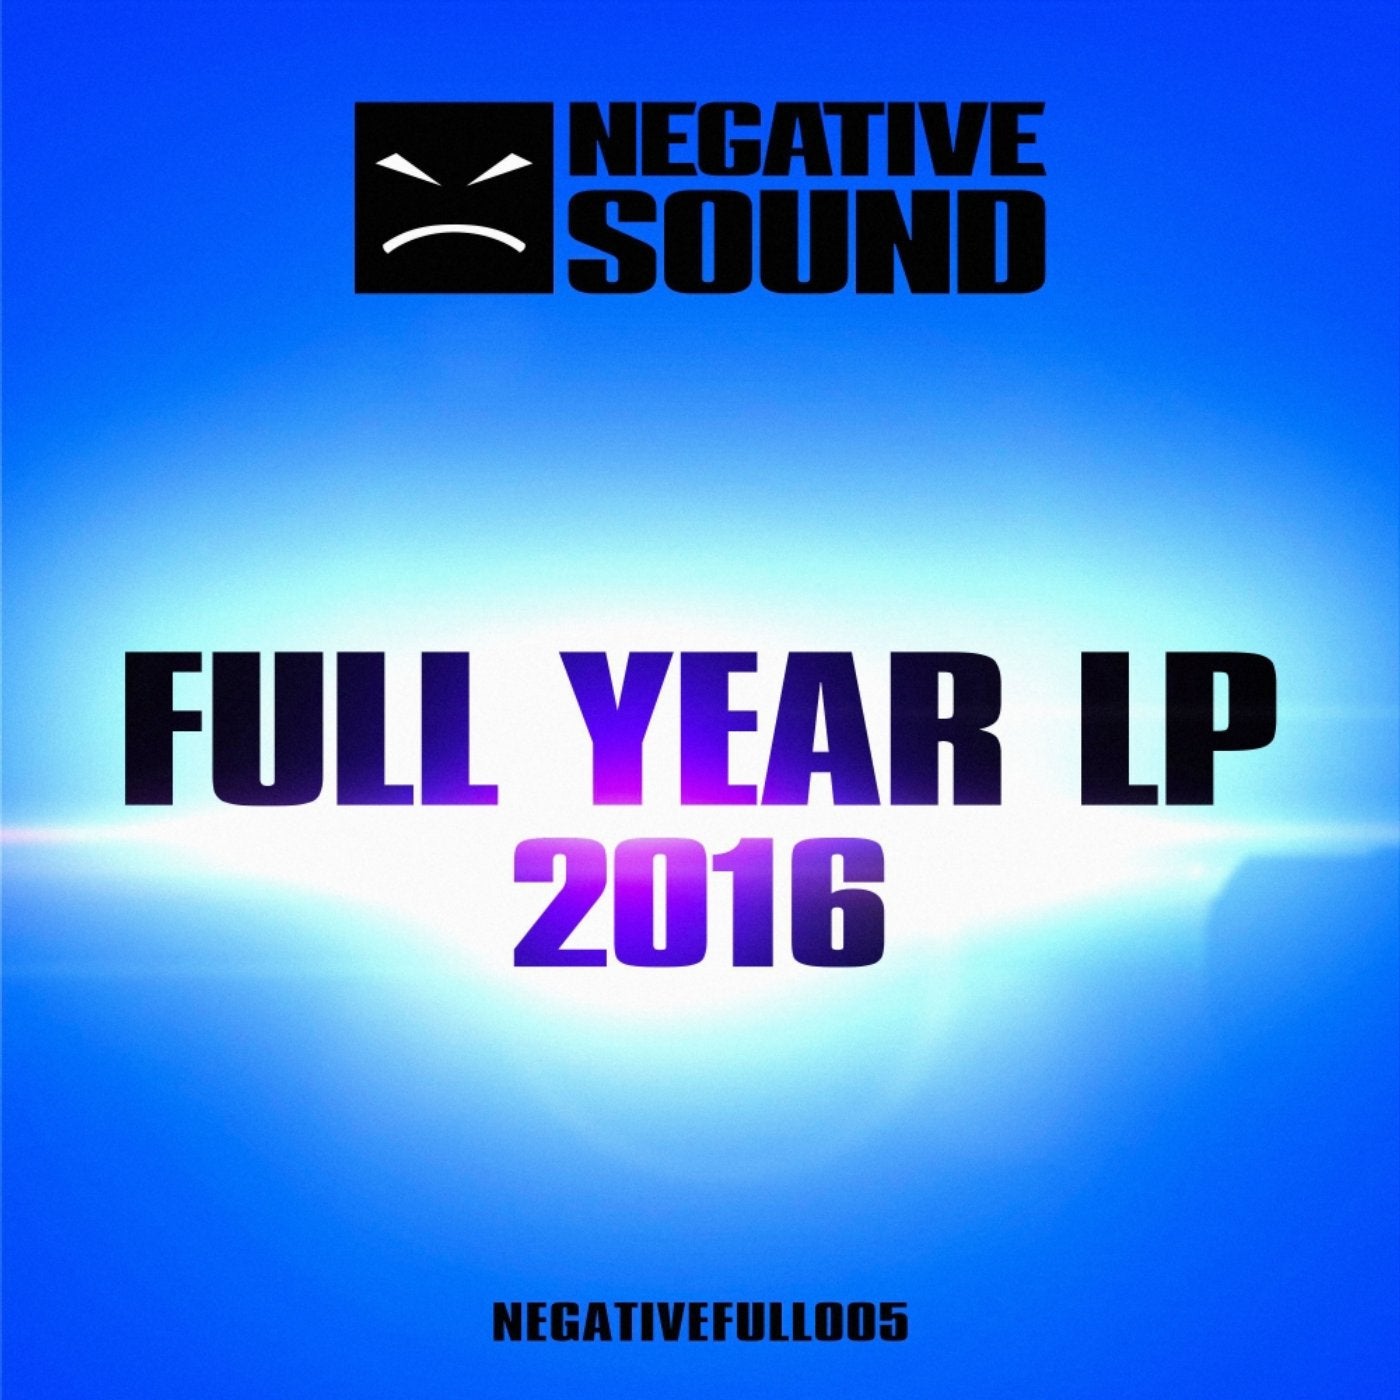 Full Year LP 2016